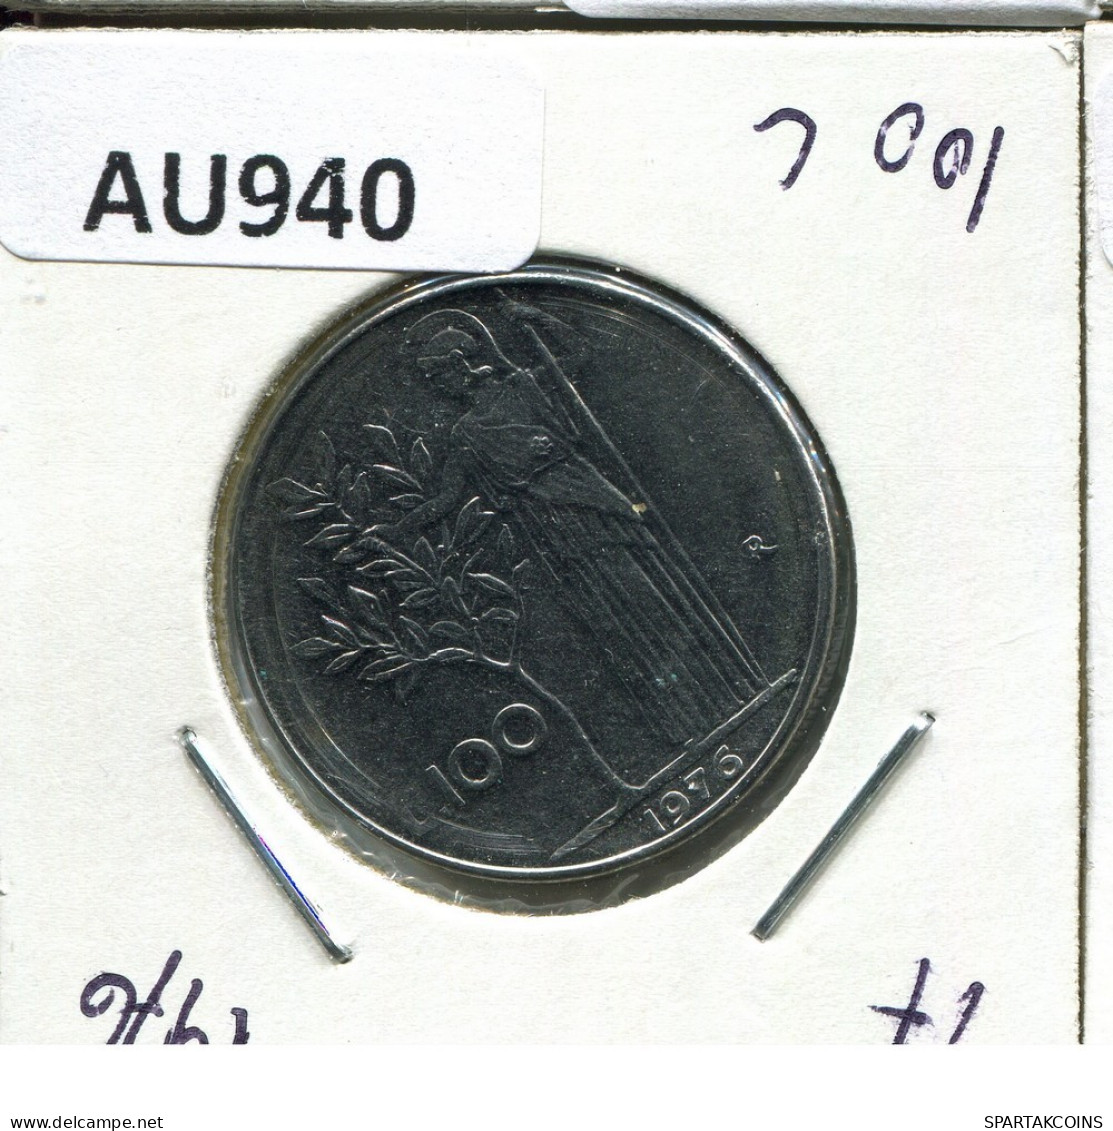 100 LIRE 1976 ITALIA ITALY Moneda #AU940.E.A - 100 Lire